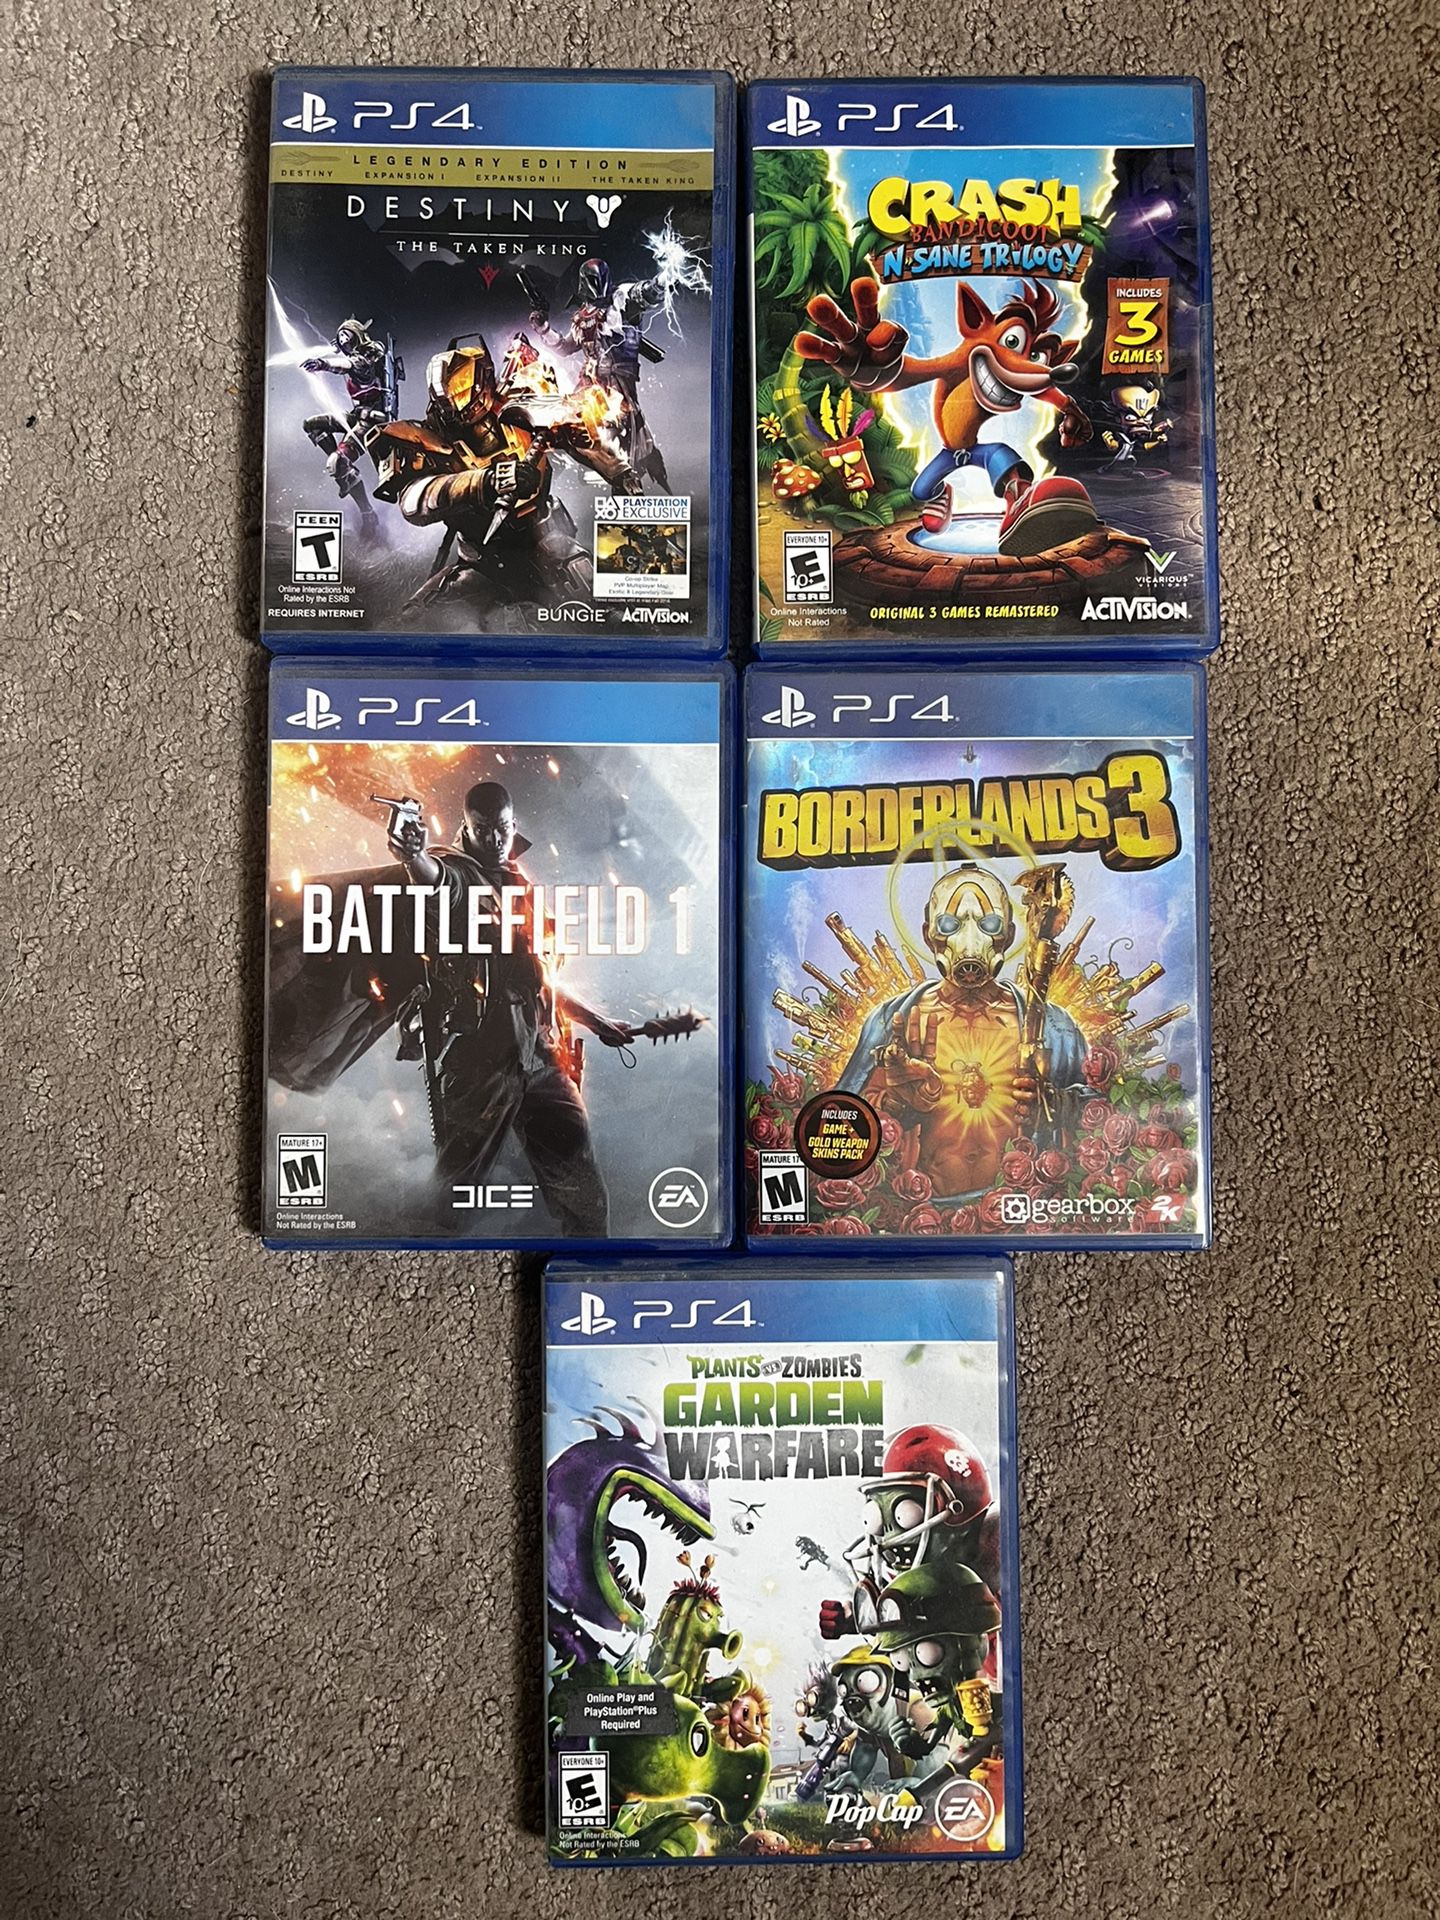 PS4 Lot : Destiny, Battlefield 1, Crash Bandicoot, Borderlands 3, Garden Warfare 